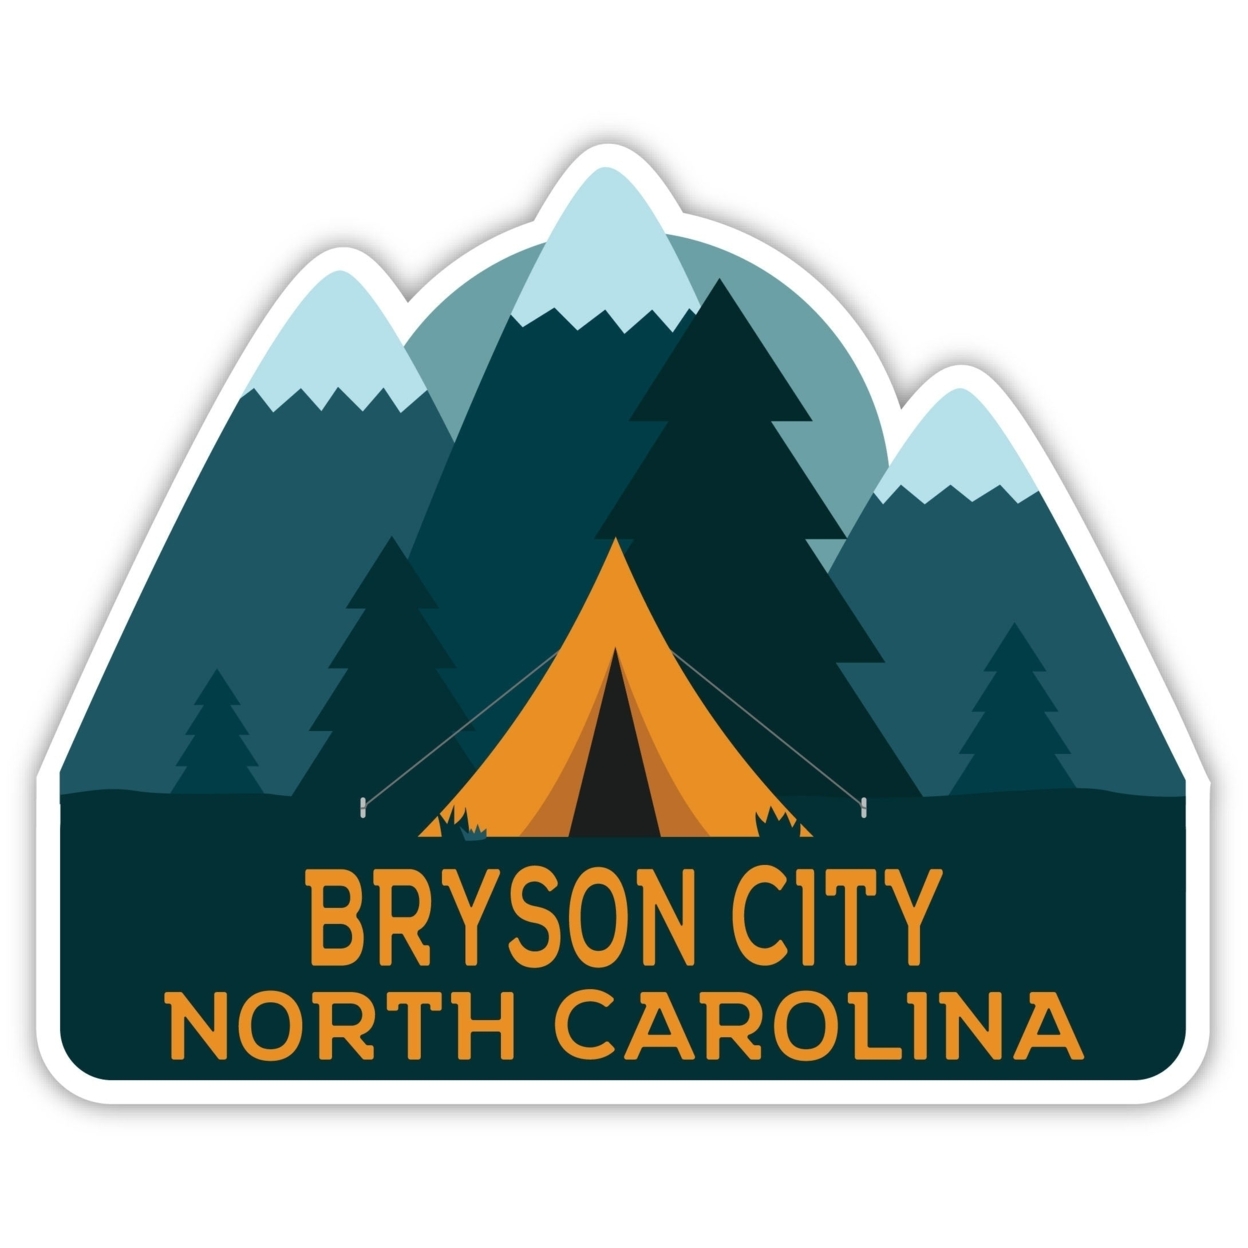 Bryson City North Carolina Souvenir Decorative Stickers (Choose Theme And Size) - Single Unit, 6-Inch, Camp Life